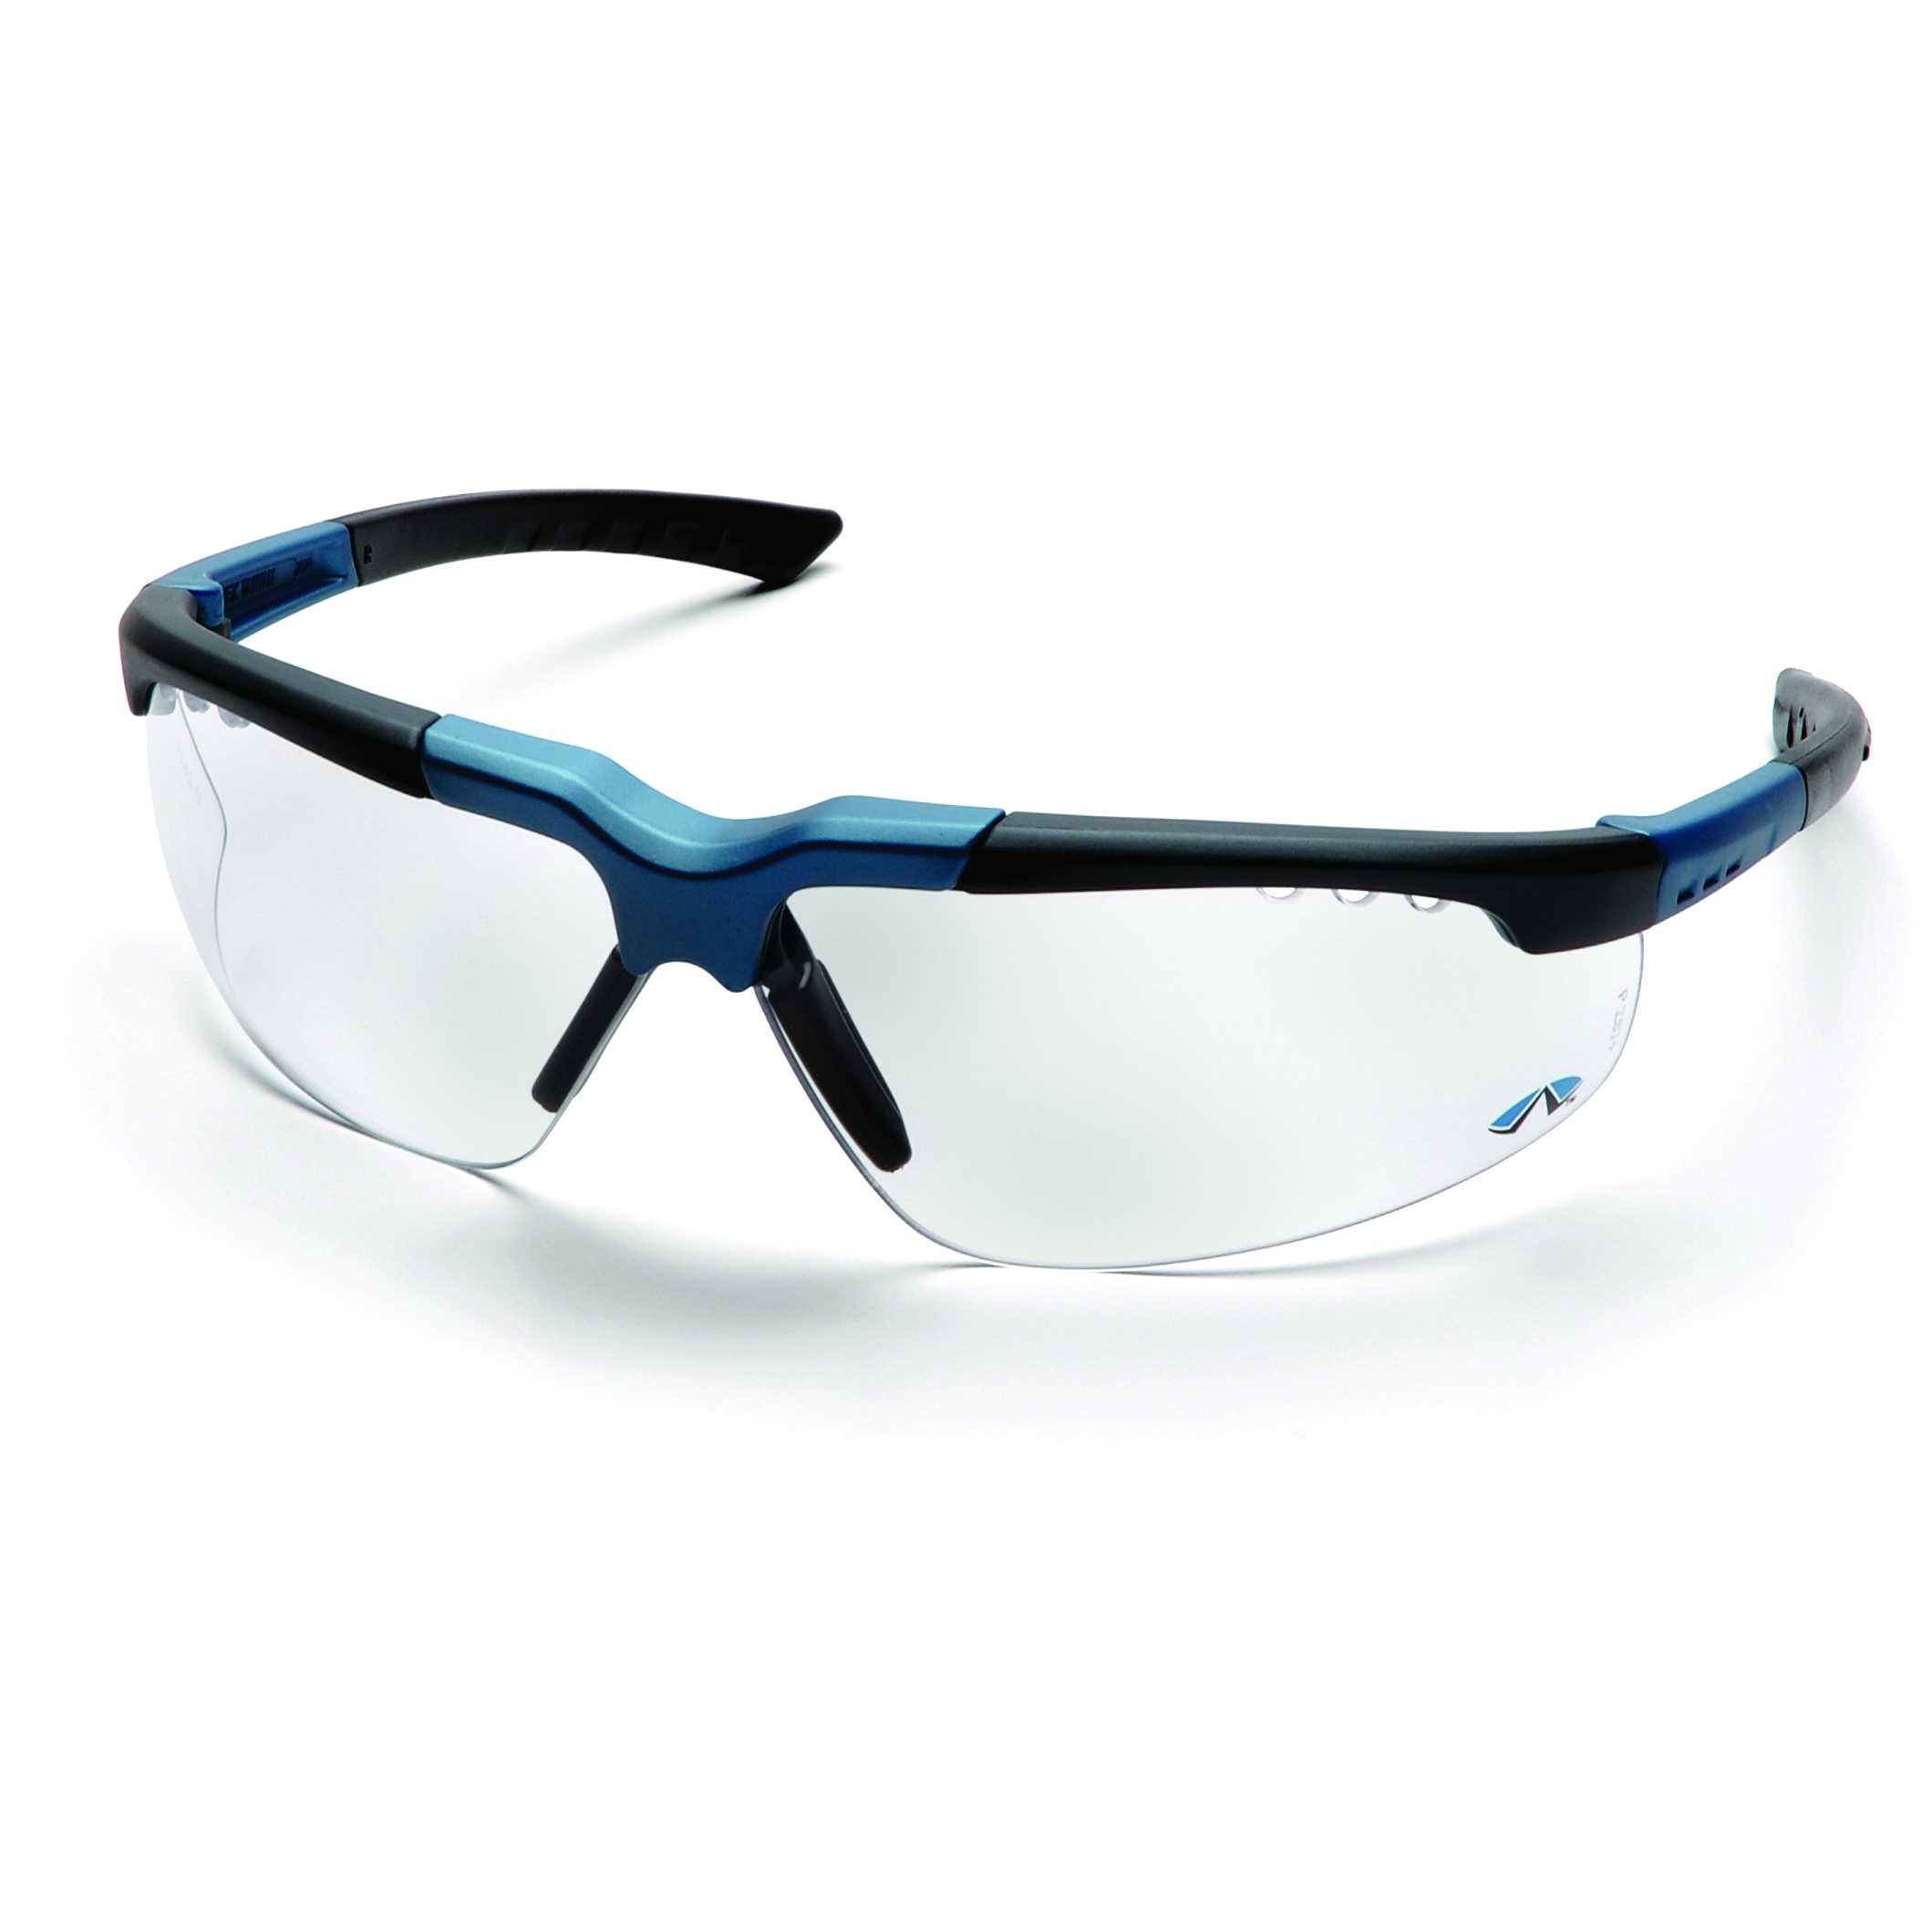 Pyramex&trade; Reatta Safety Glasses, Black/Blue Frame, Clear Lens